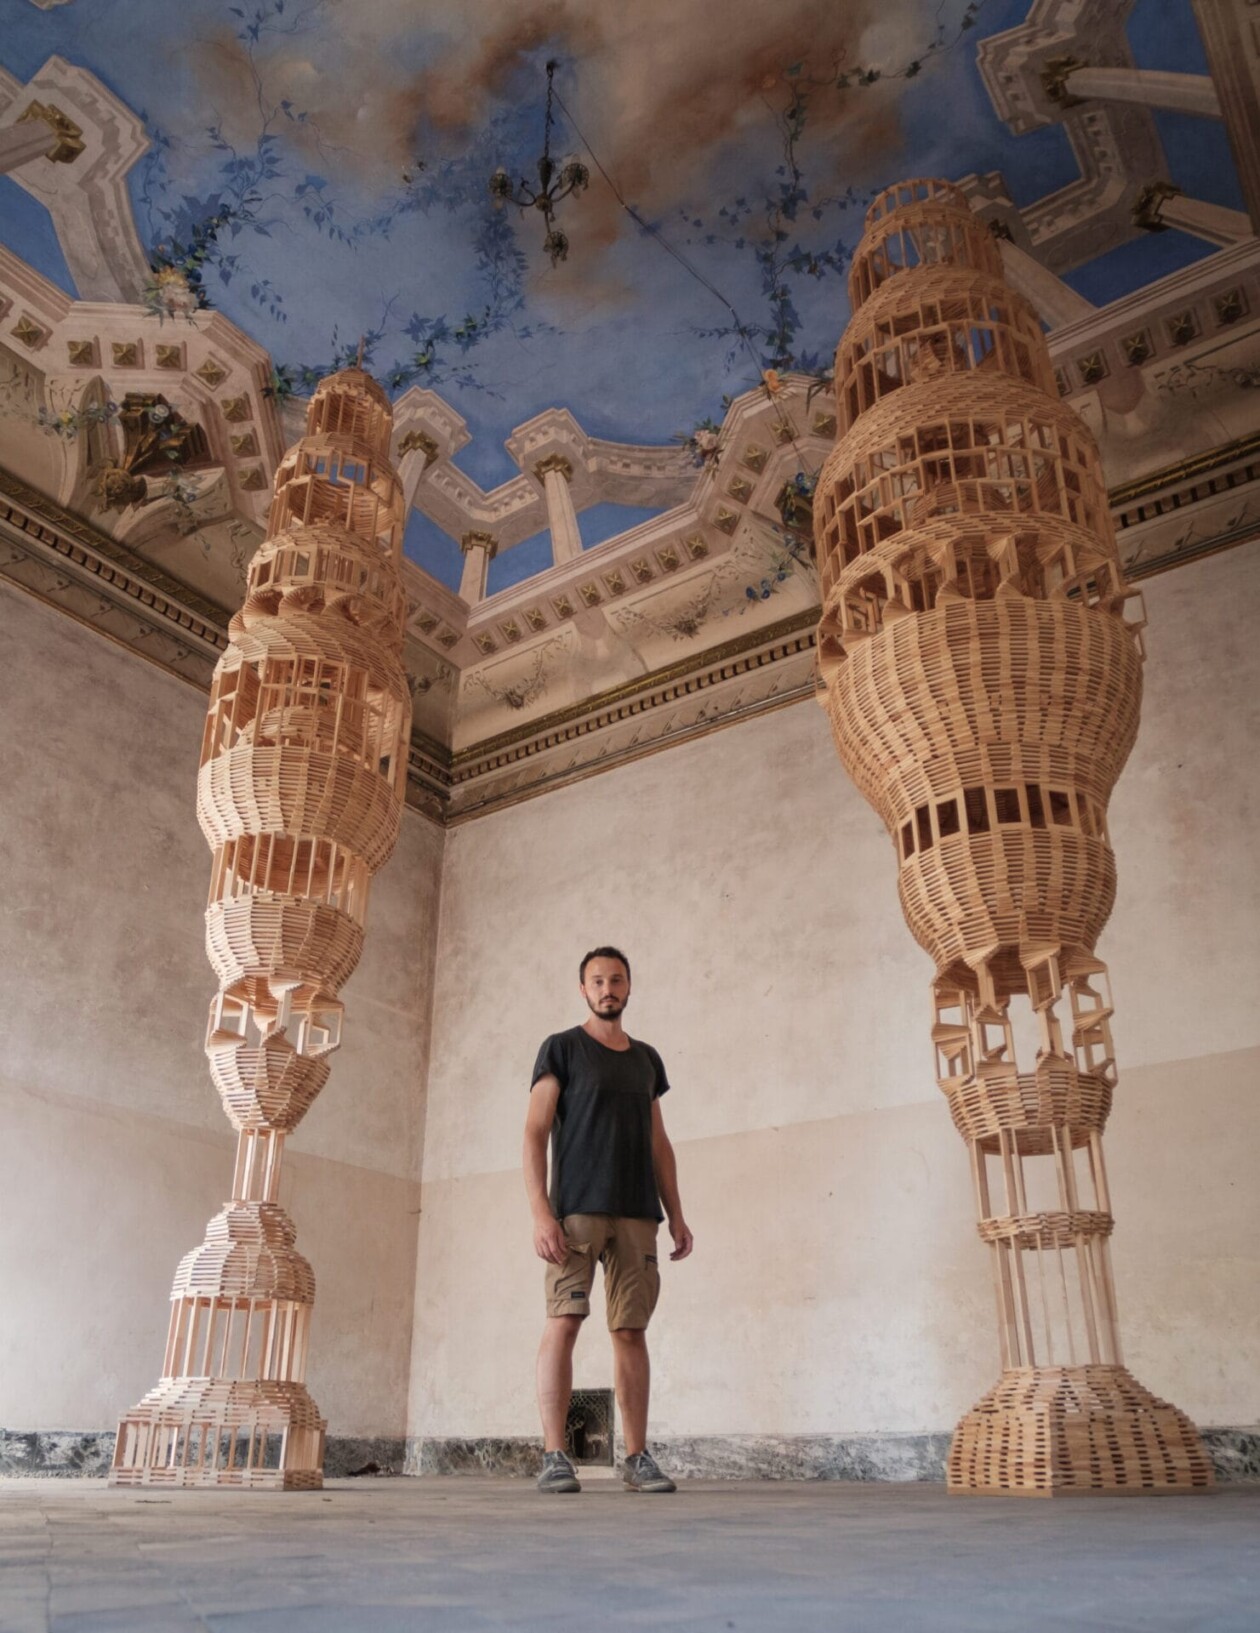 Balancing Act, The Gravity Defying Architectural Installations Of Raffaele Salvoldi (9)